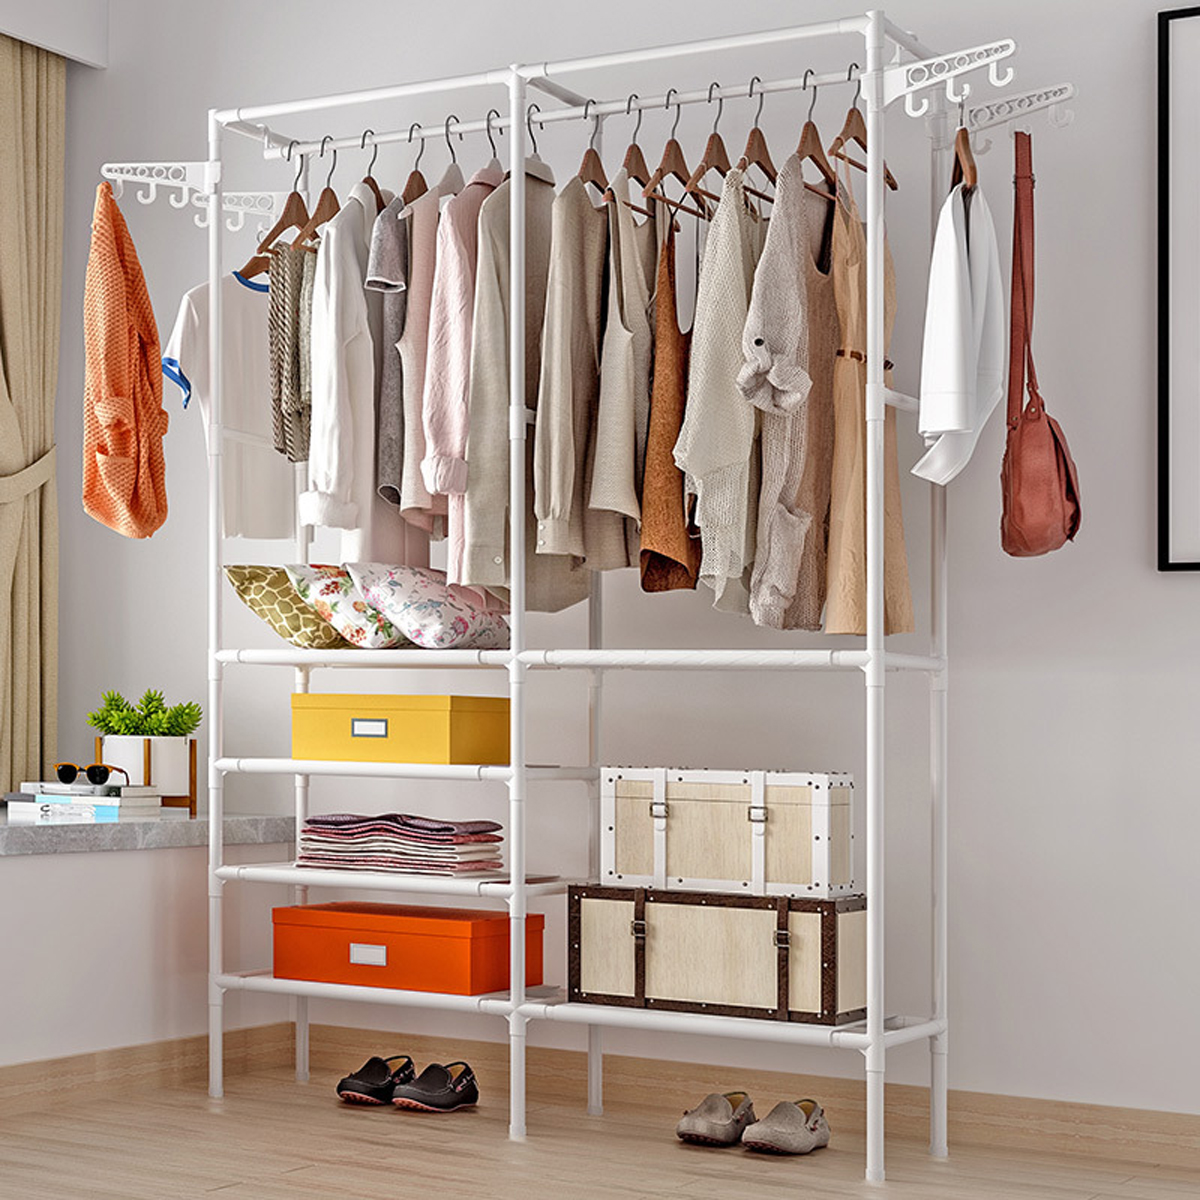 Standing-Landing-Wardrobe-Protable-Hanger-Holder-Durable-Clothes-Organizer-Household-Clothes-Rack-Sh-1606042-10